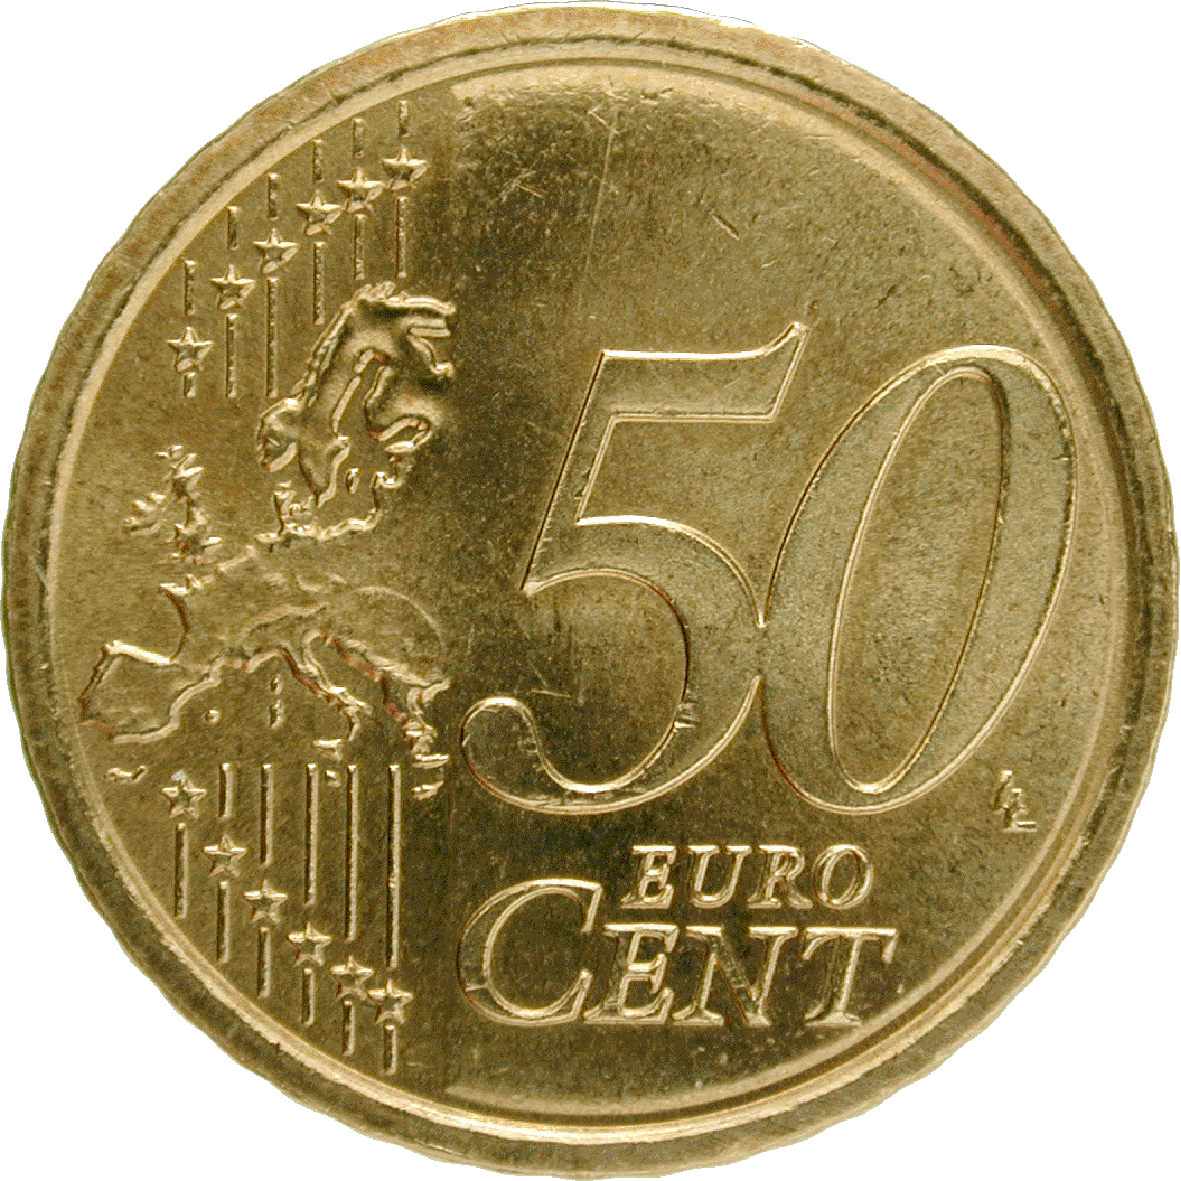 50 Cent Coin Clip Art